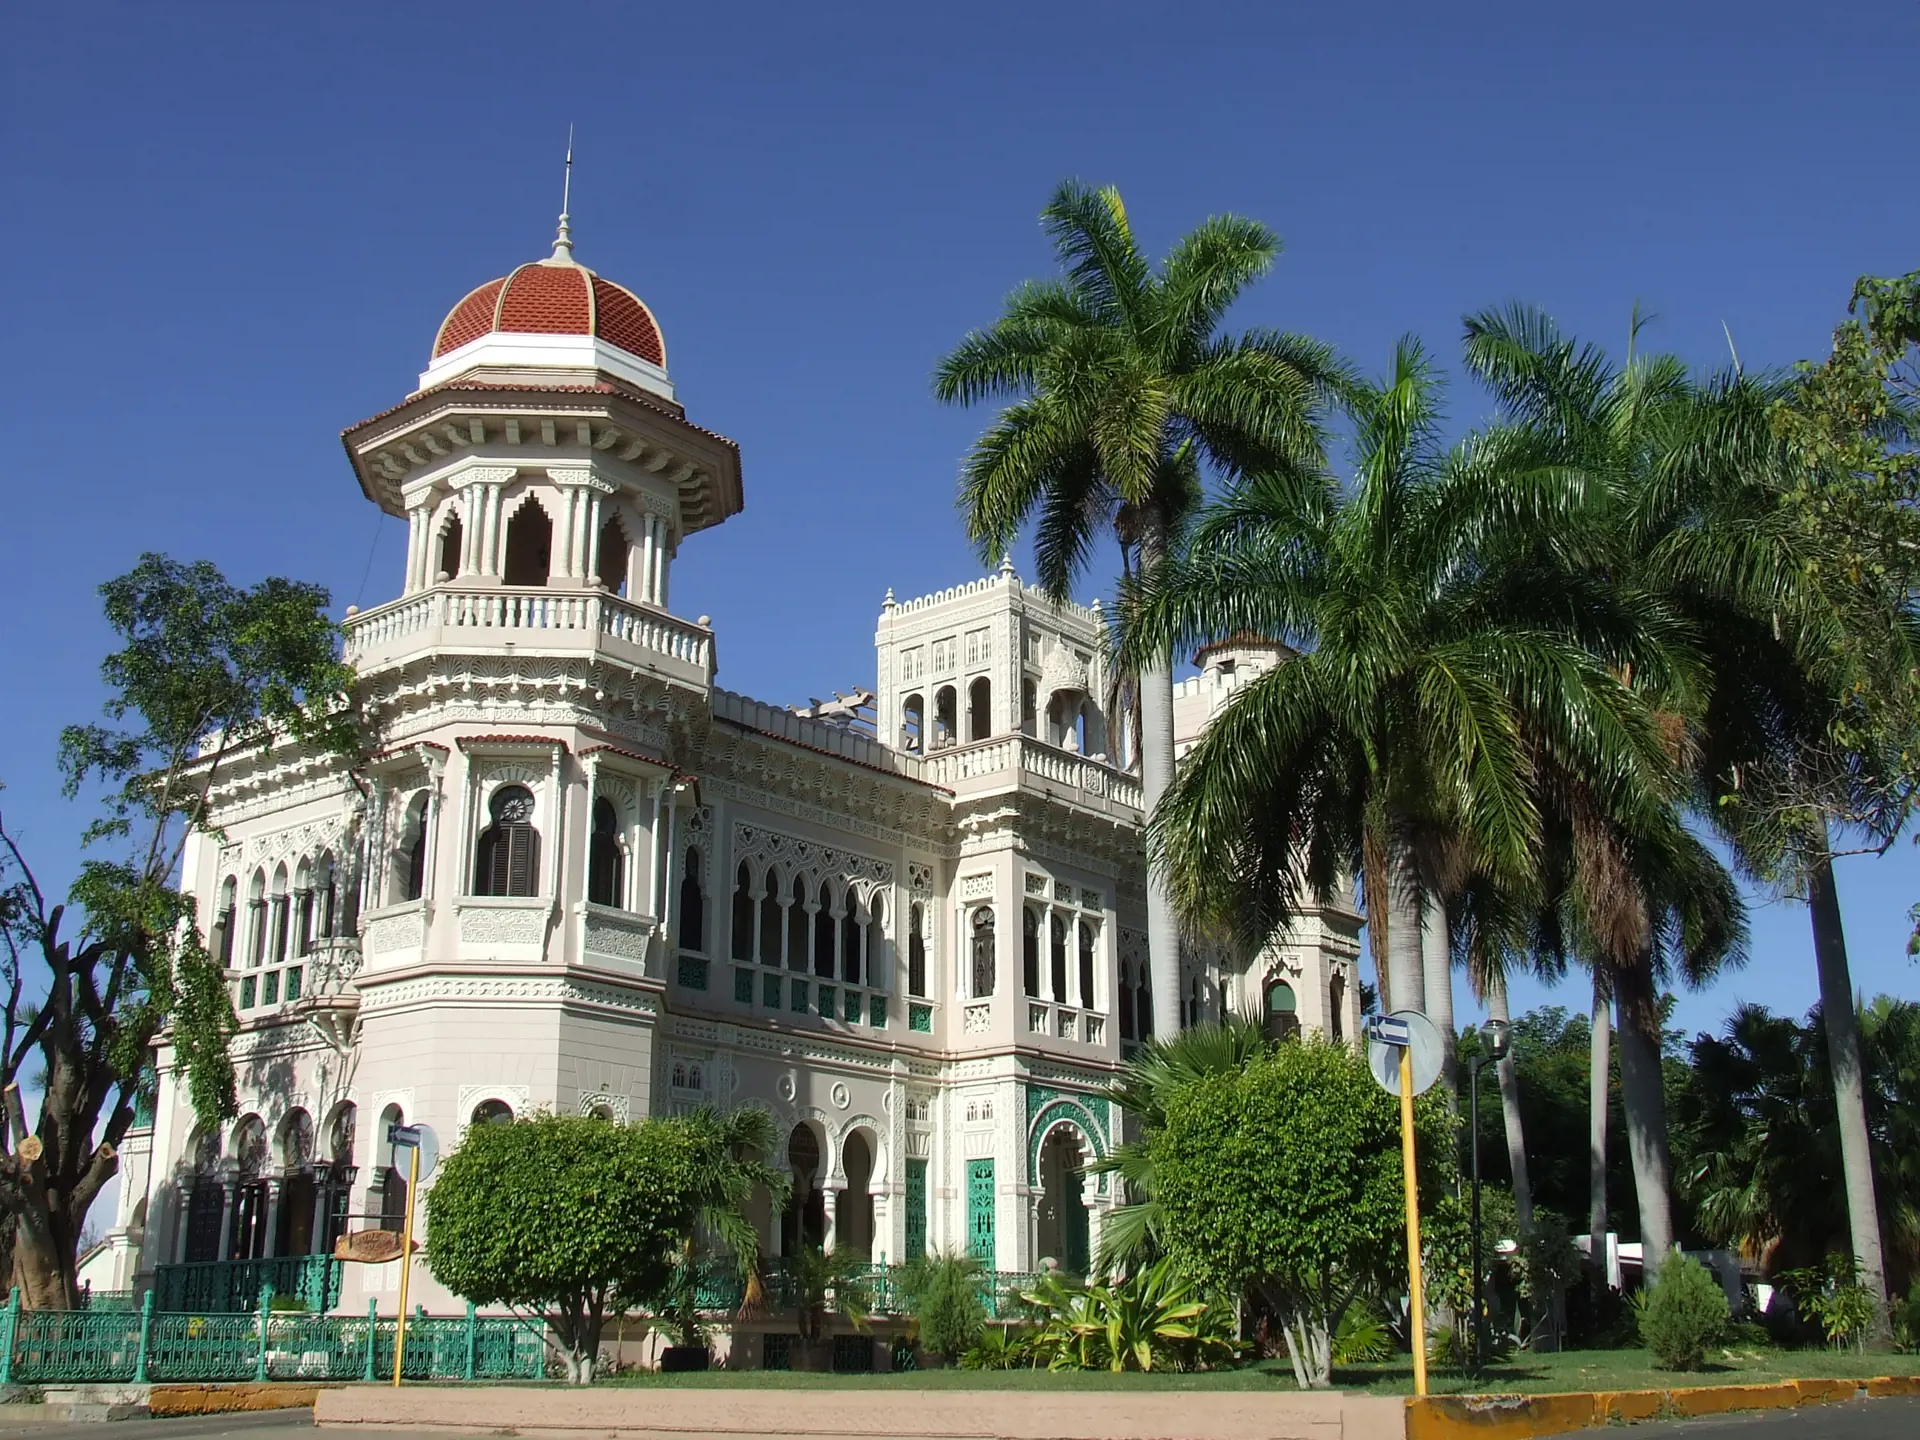 Beautiful palace in Cienfuegos city, Cuba shutterstock_16316269.jpg